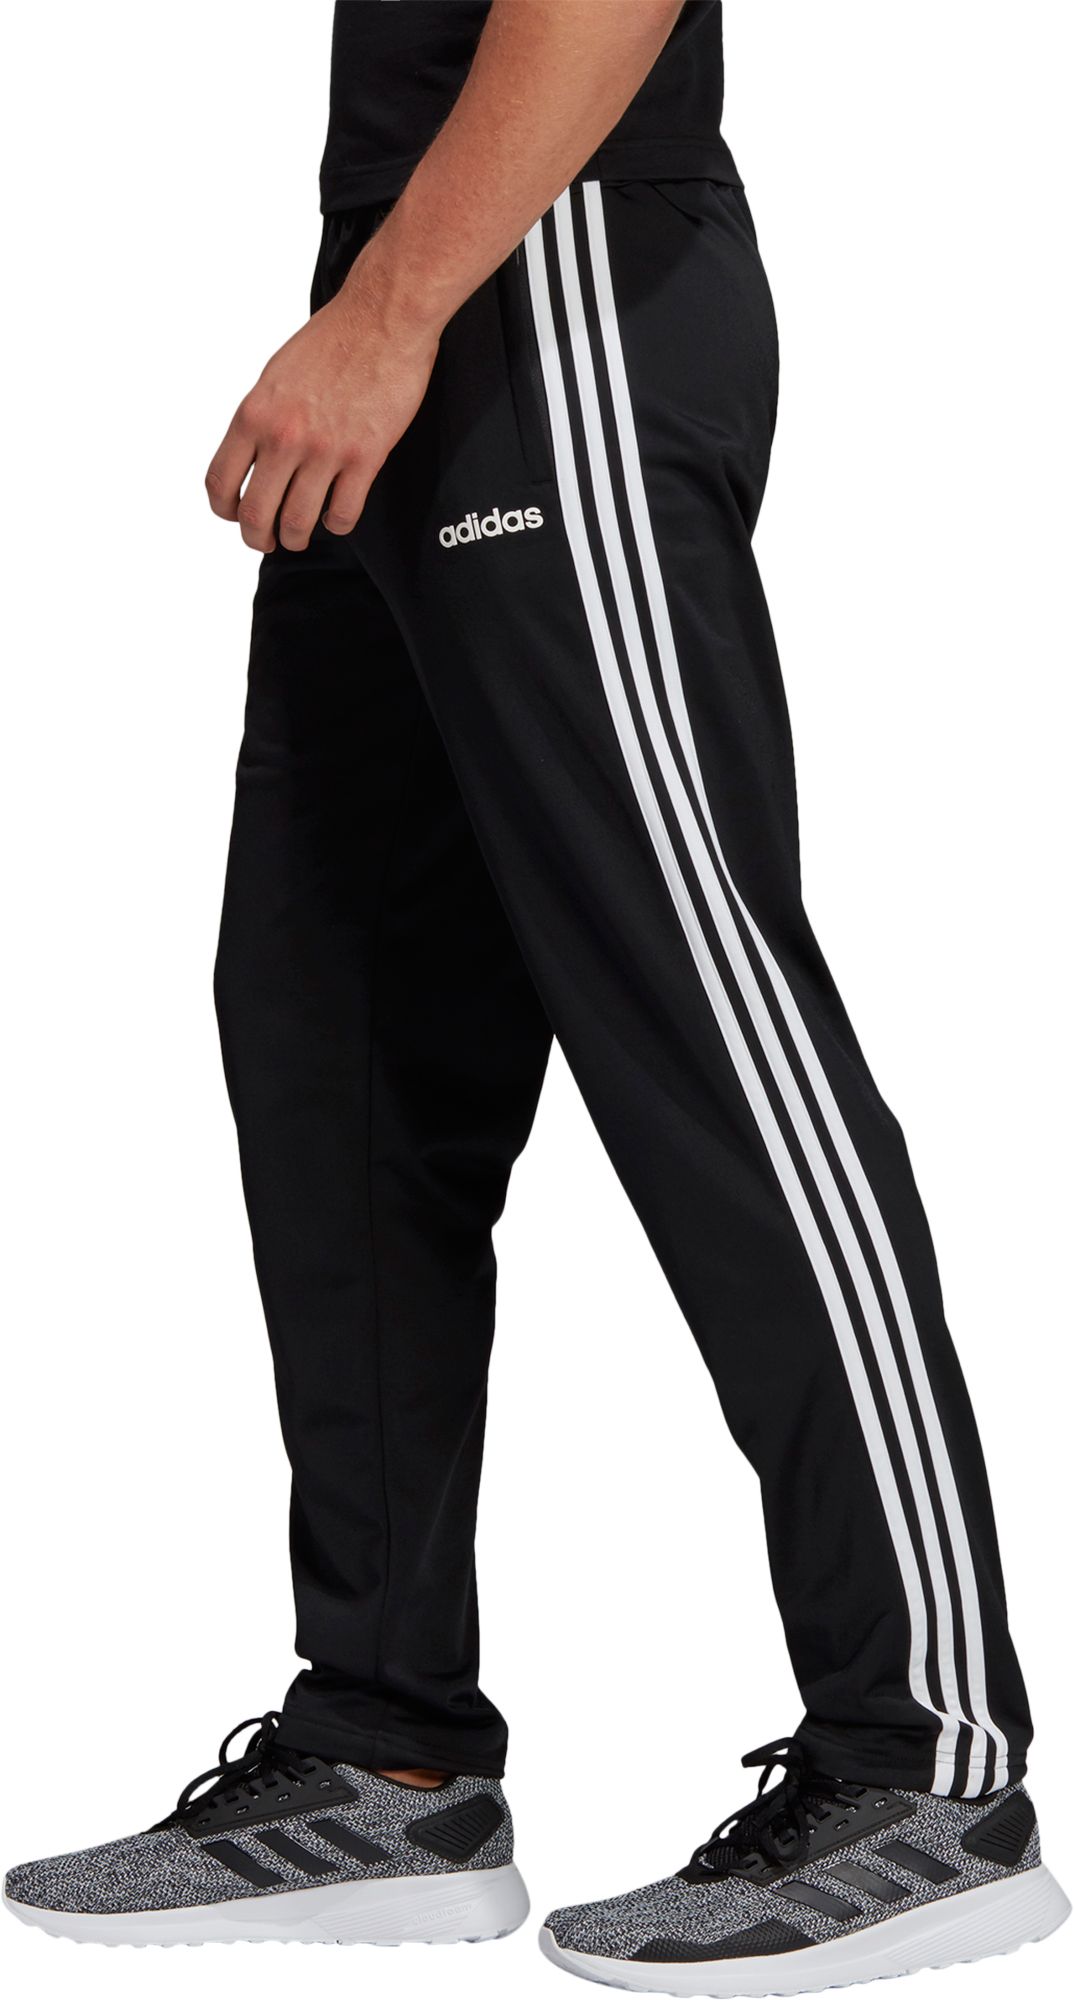 black adidas pants with black stripes